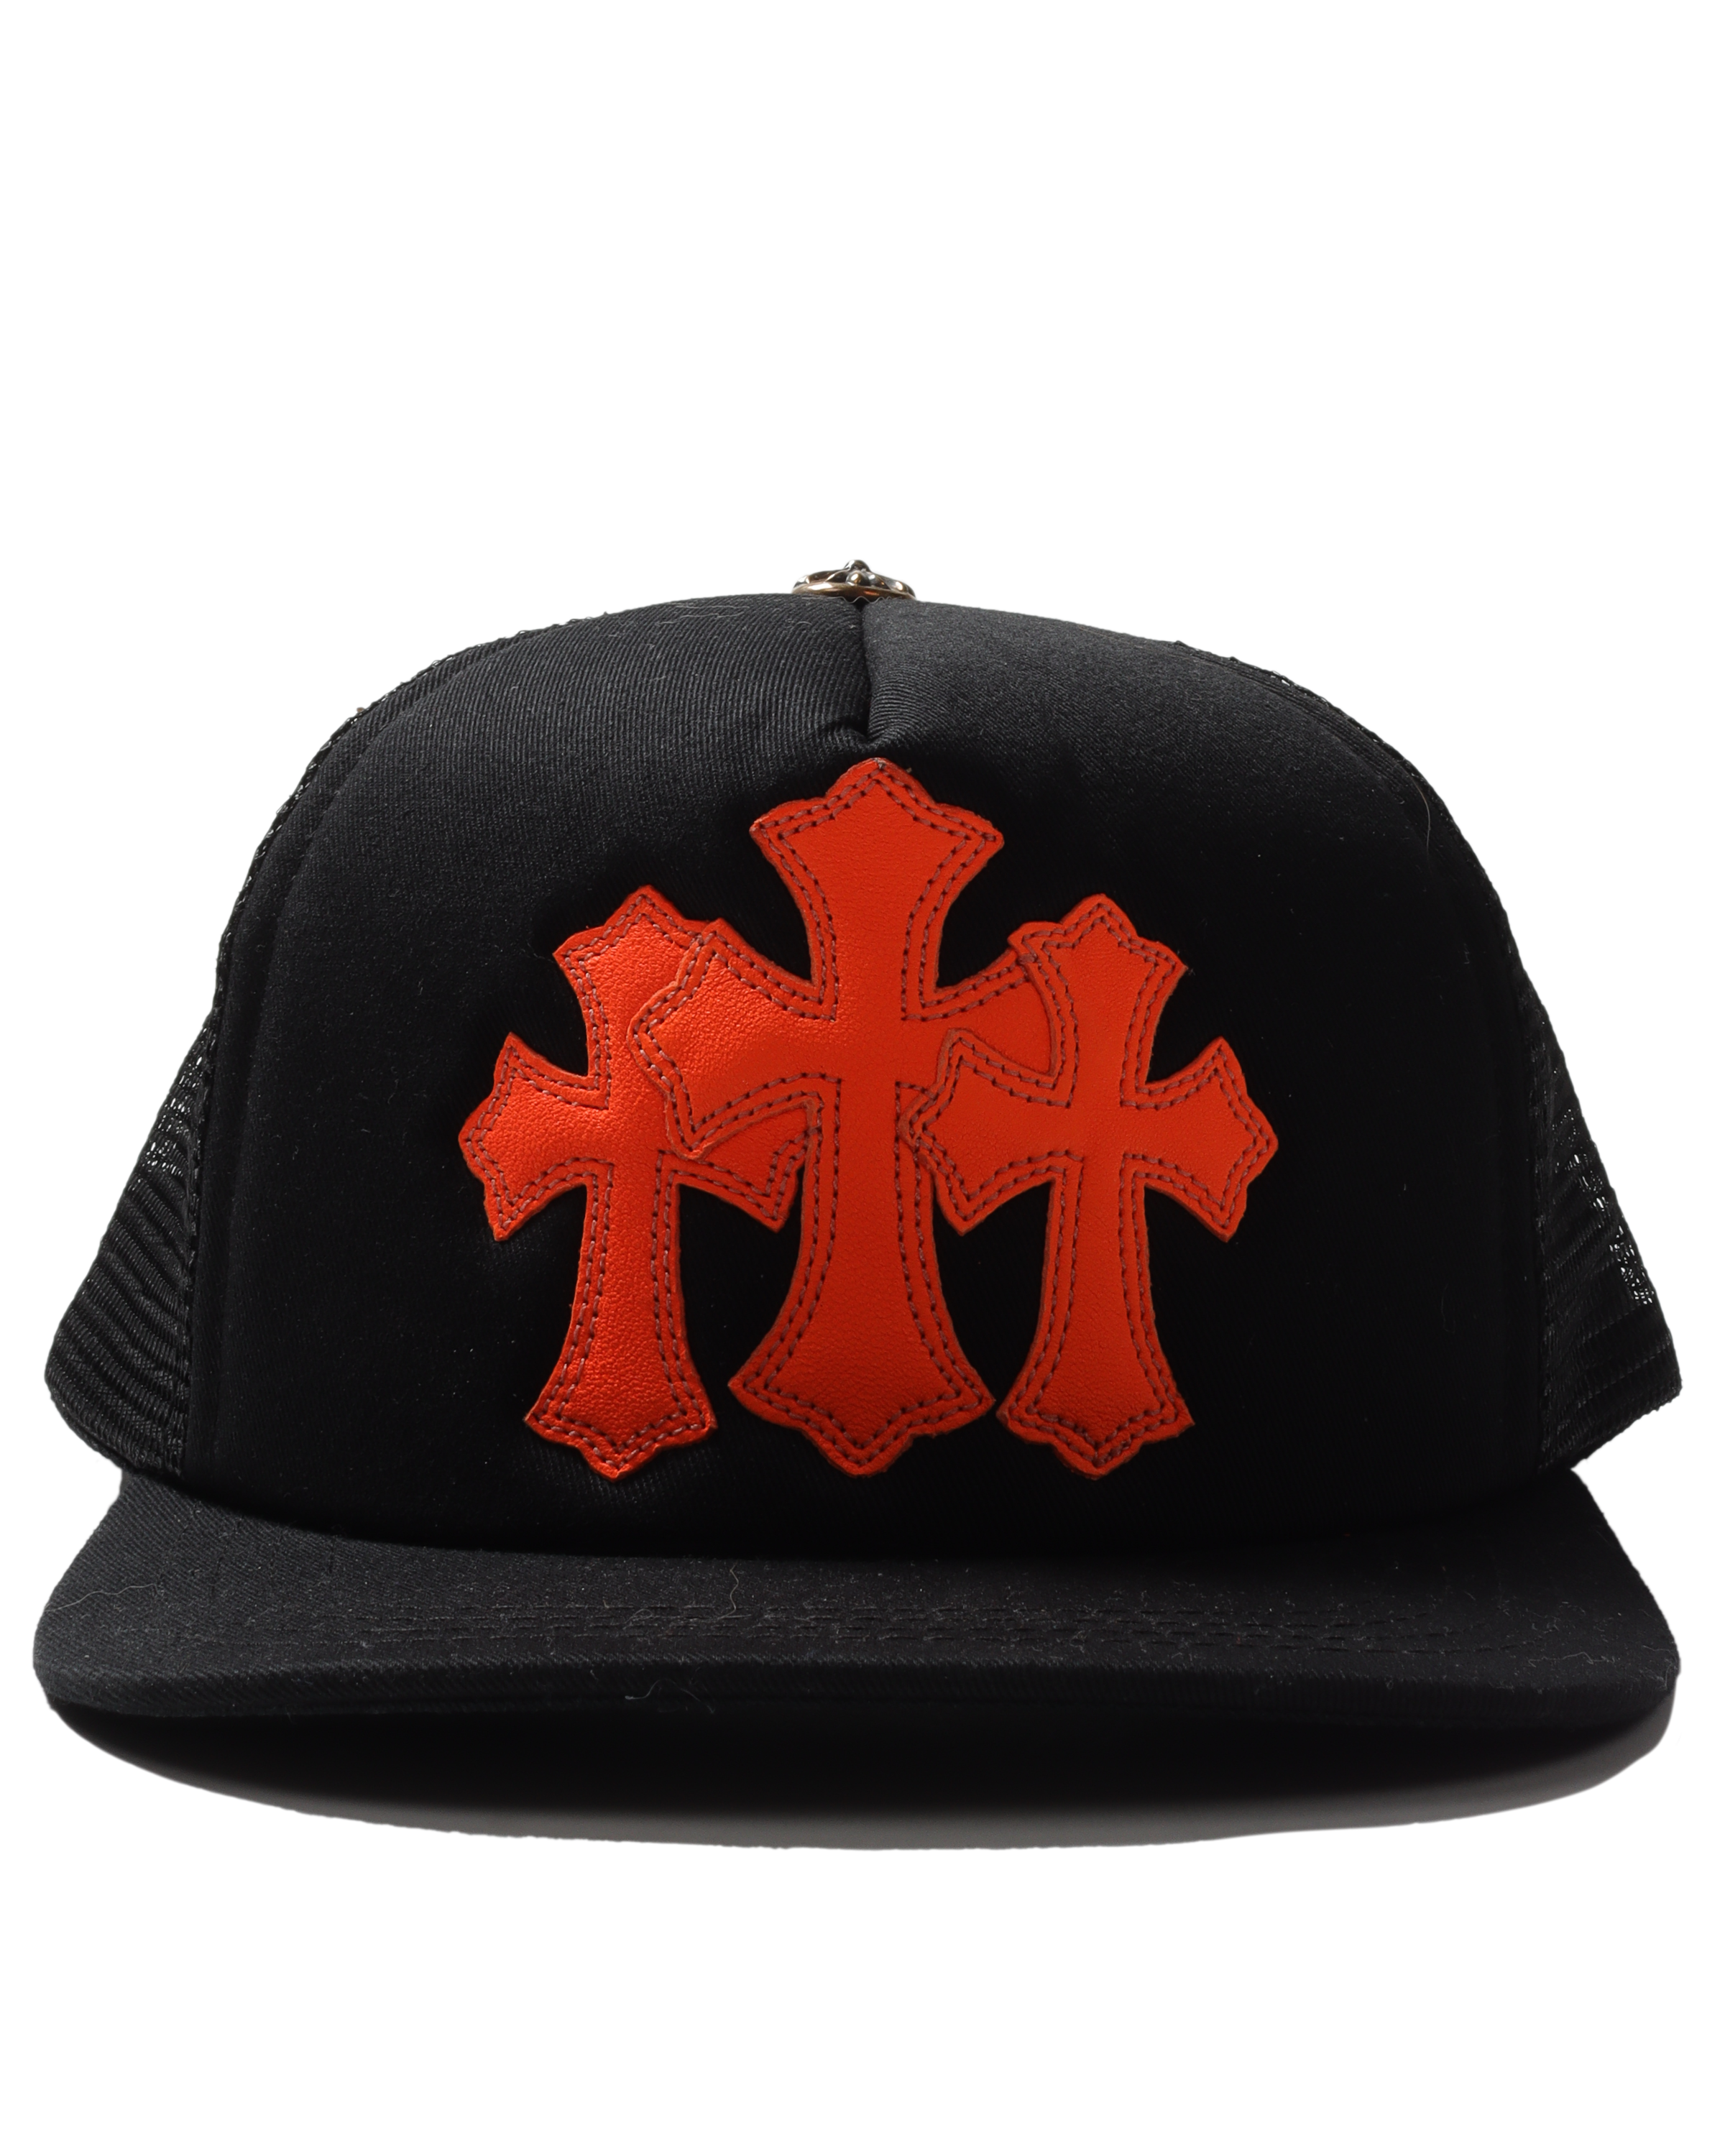 Orange Cemetery Cross Patch Hat